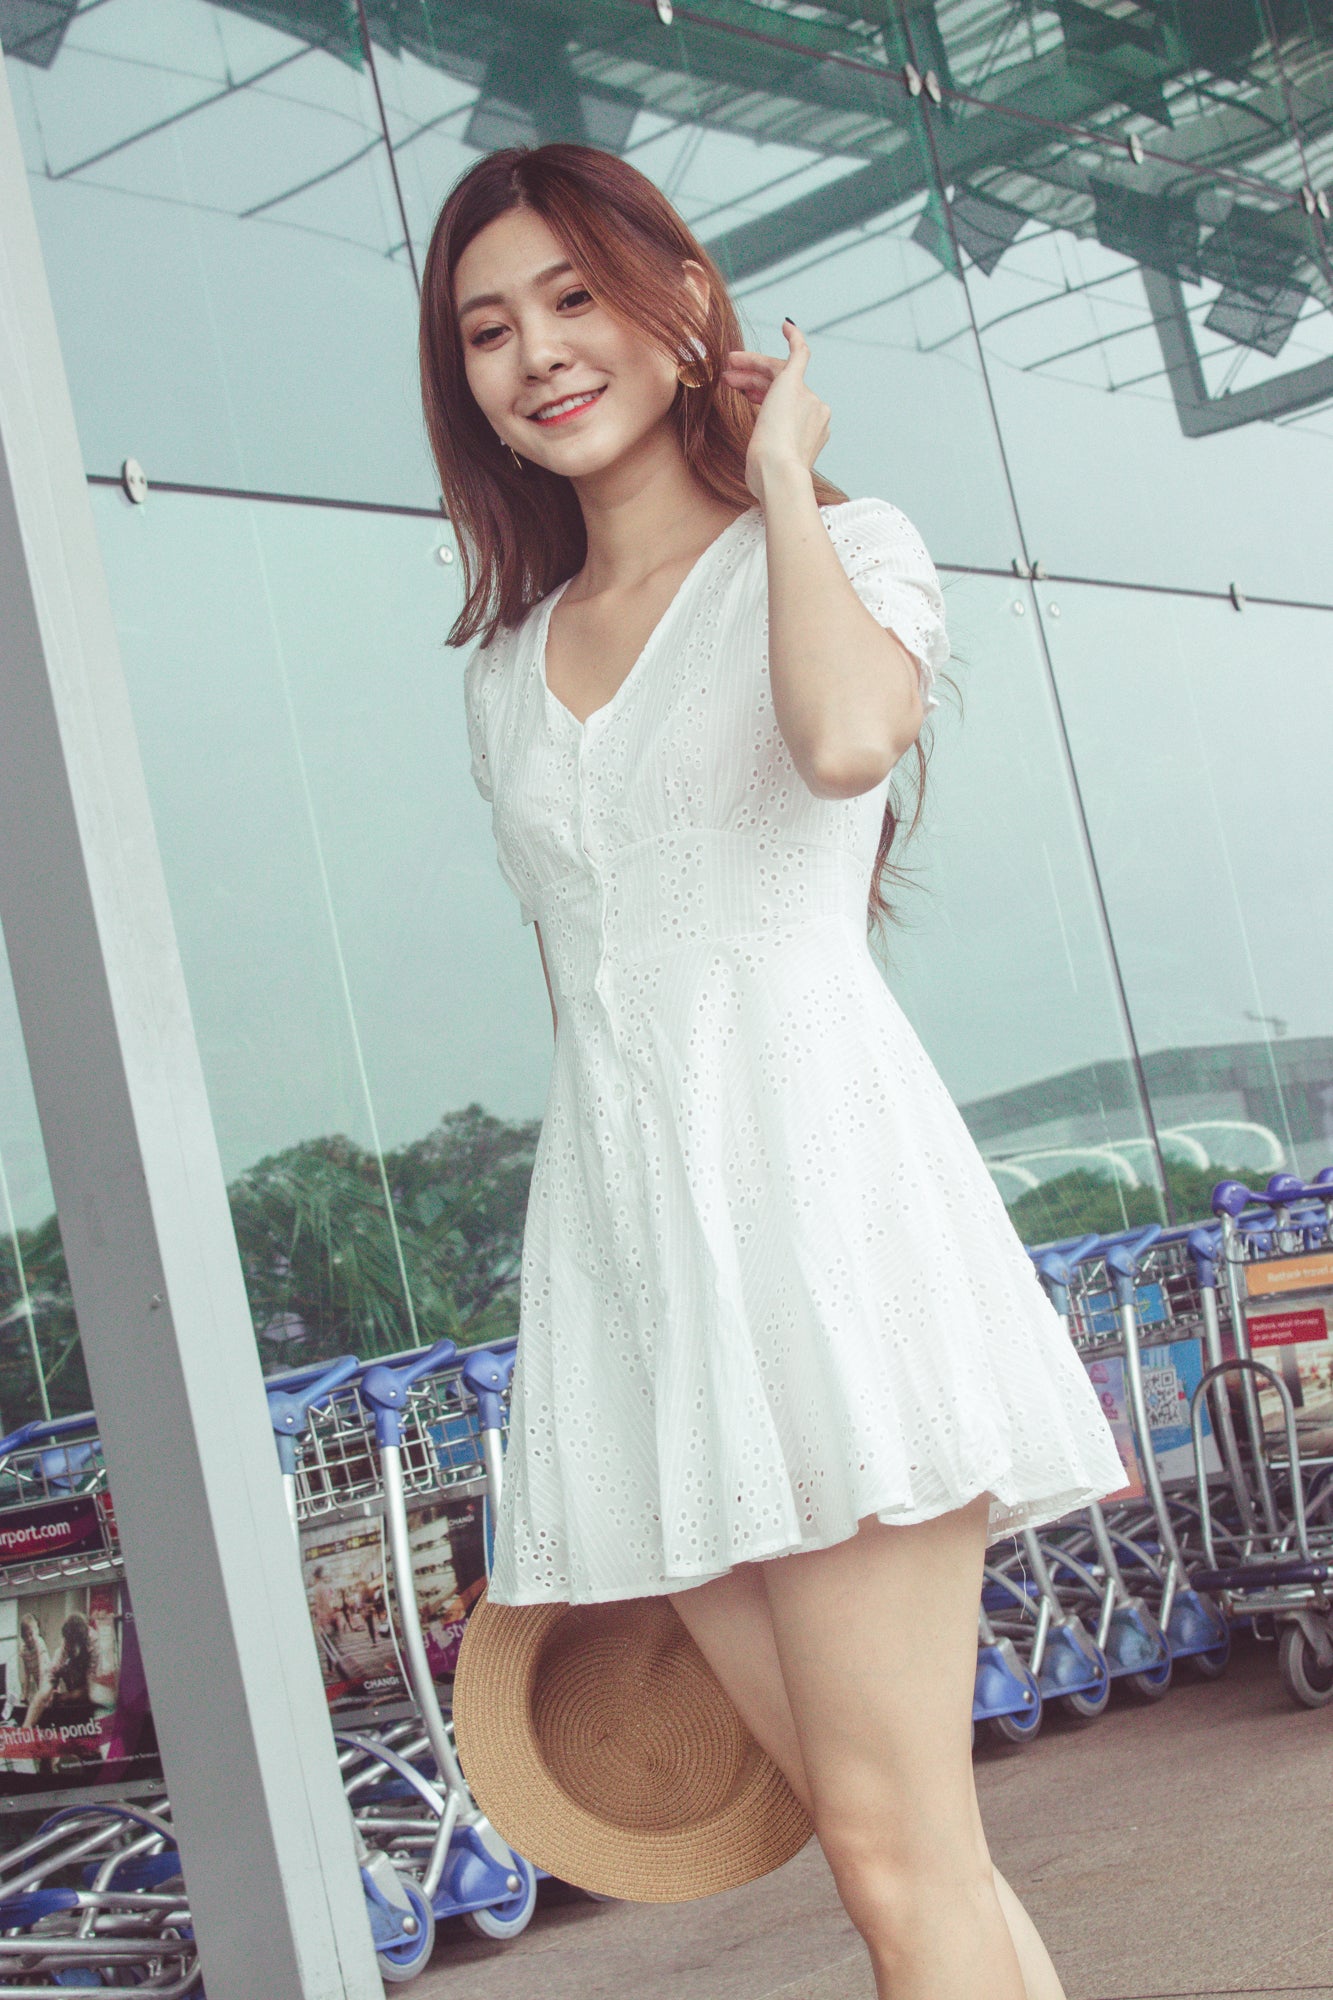 Voralle Crochet Dress in White